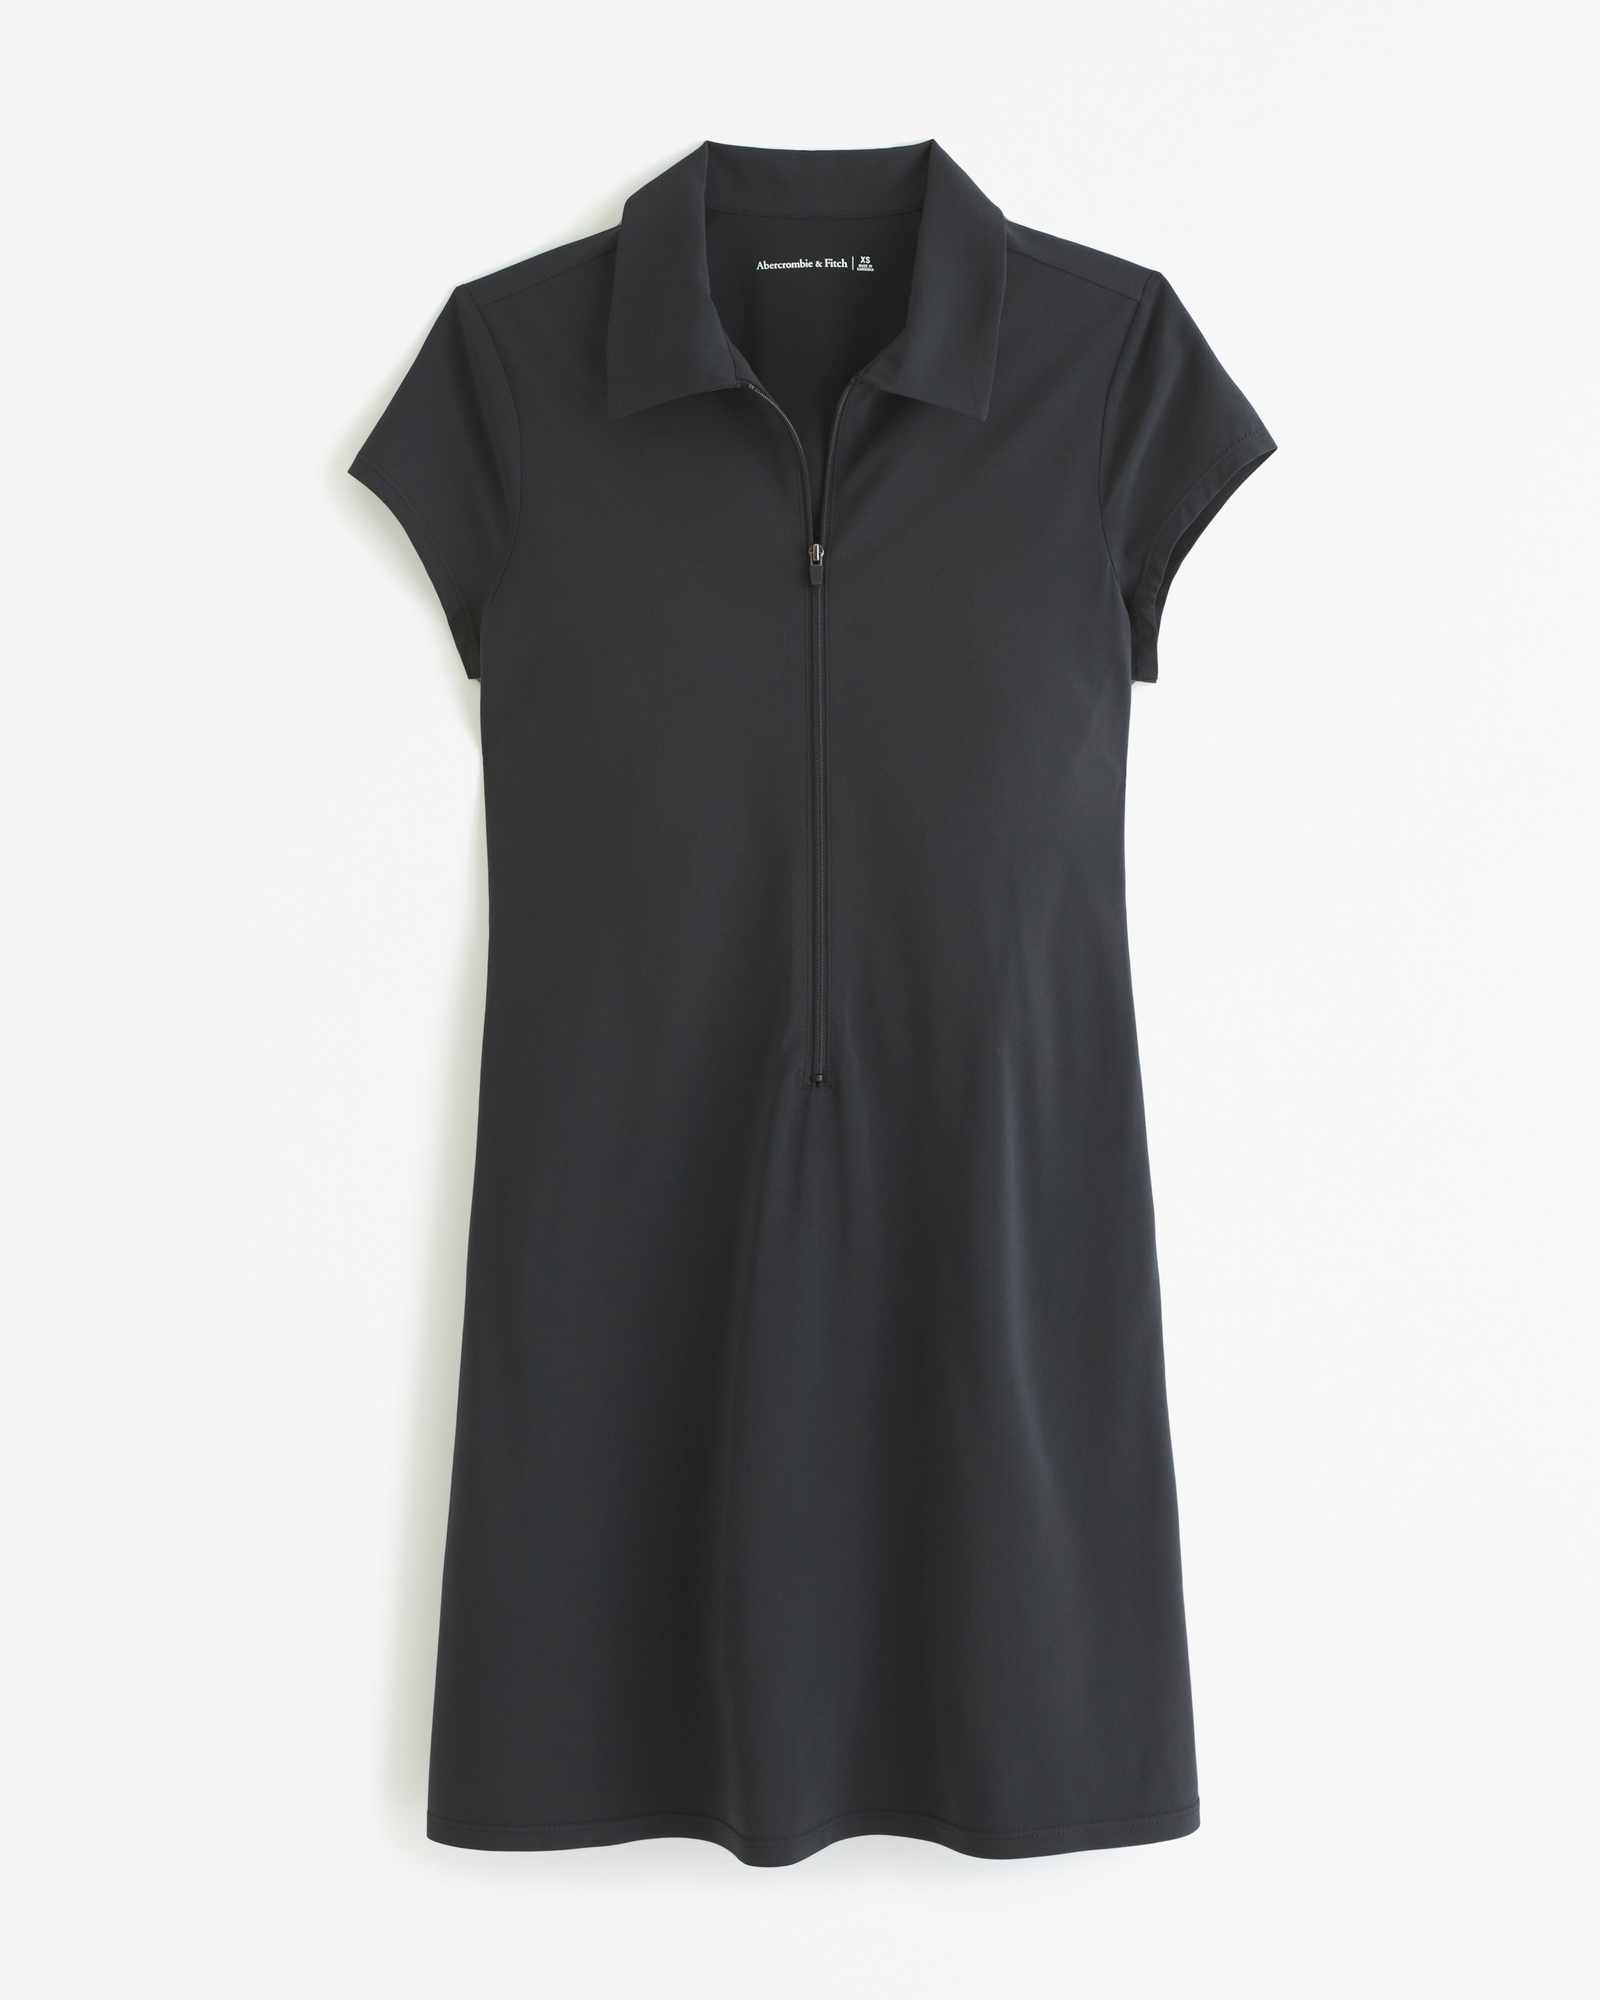 Abercrombie's popular Travel Mini Dress is finally on sale — get